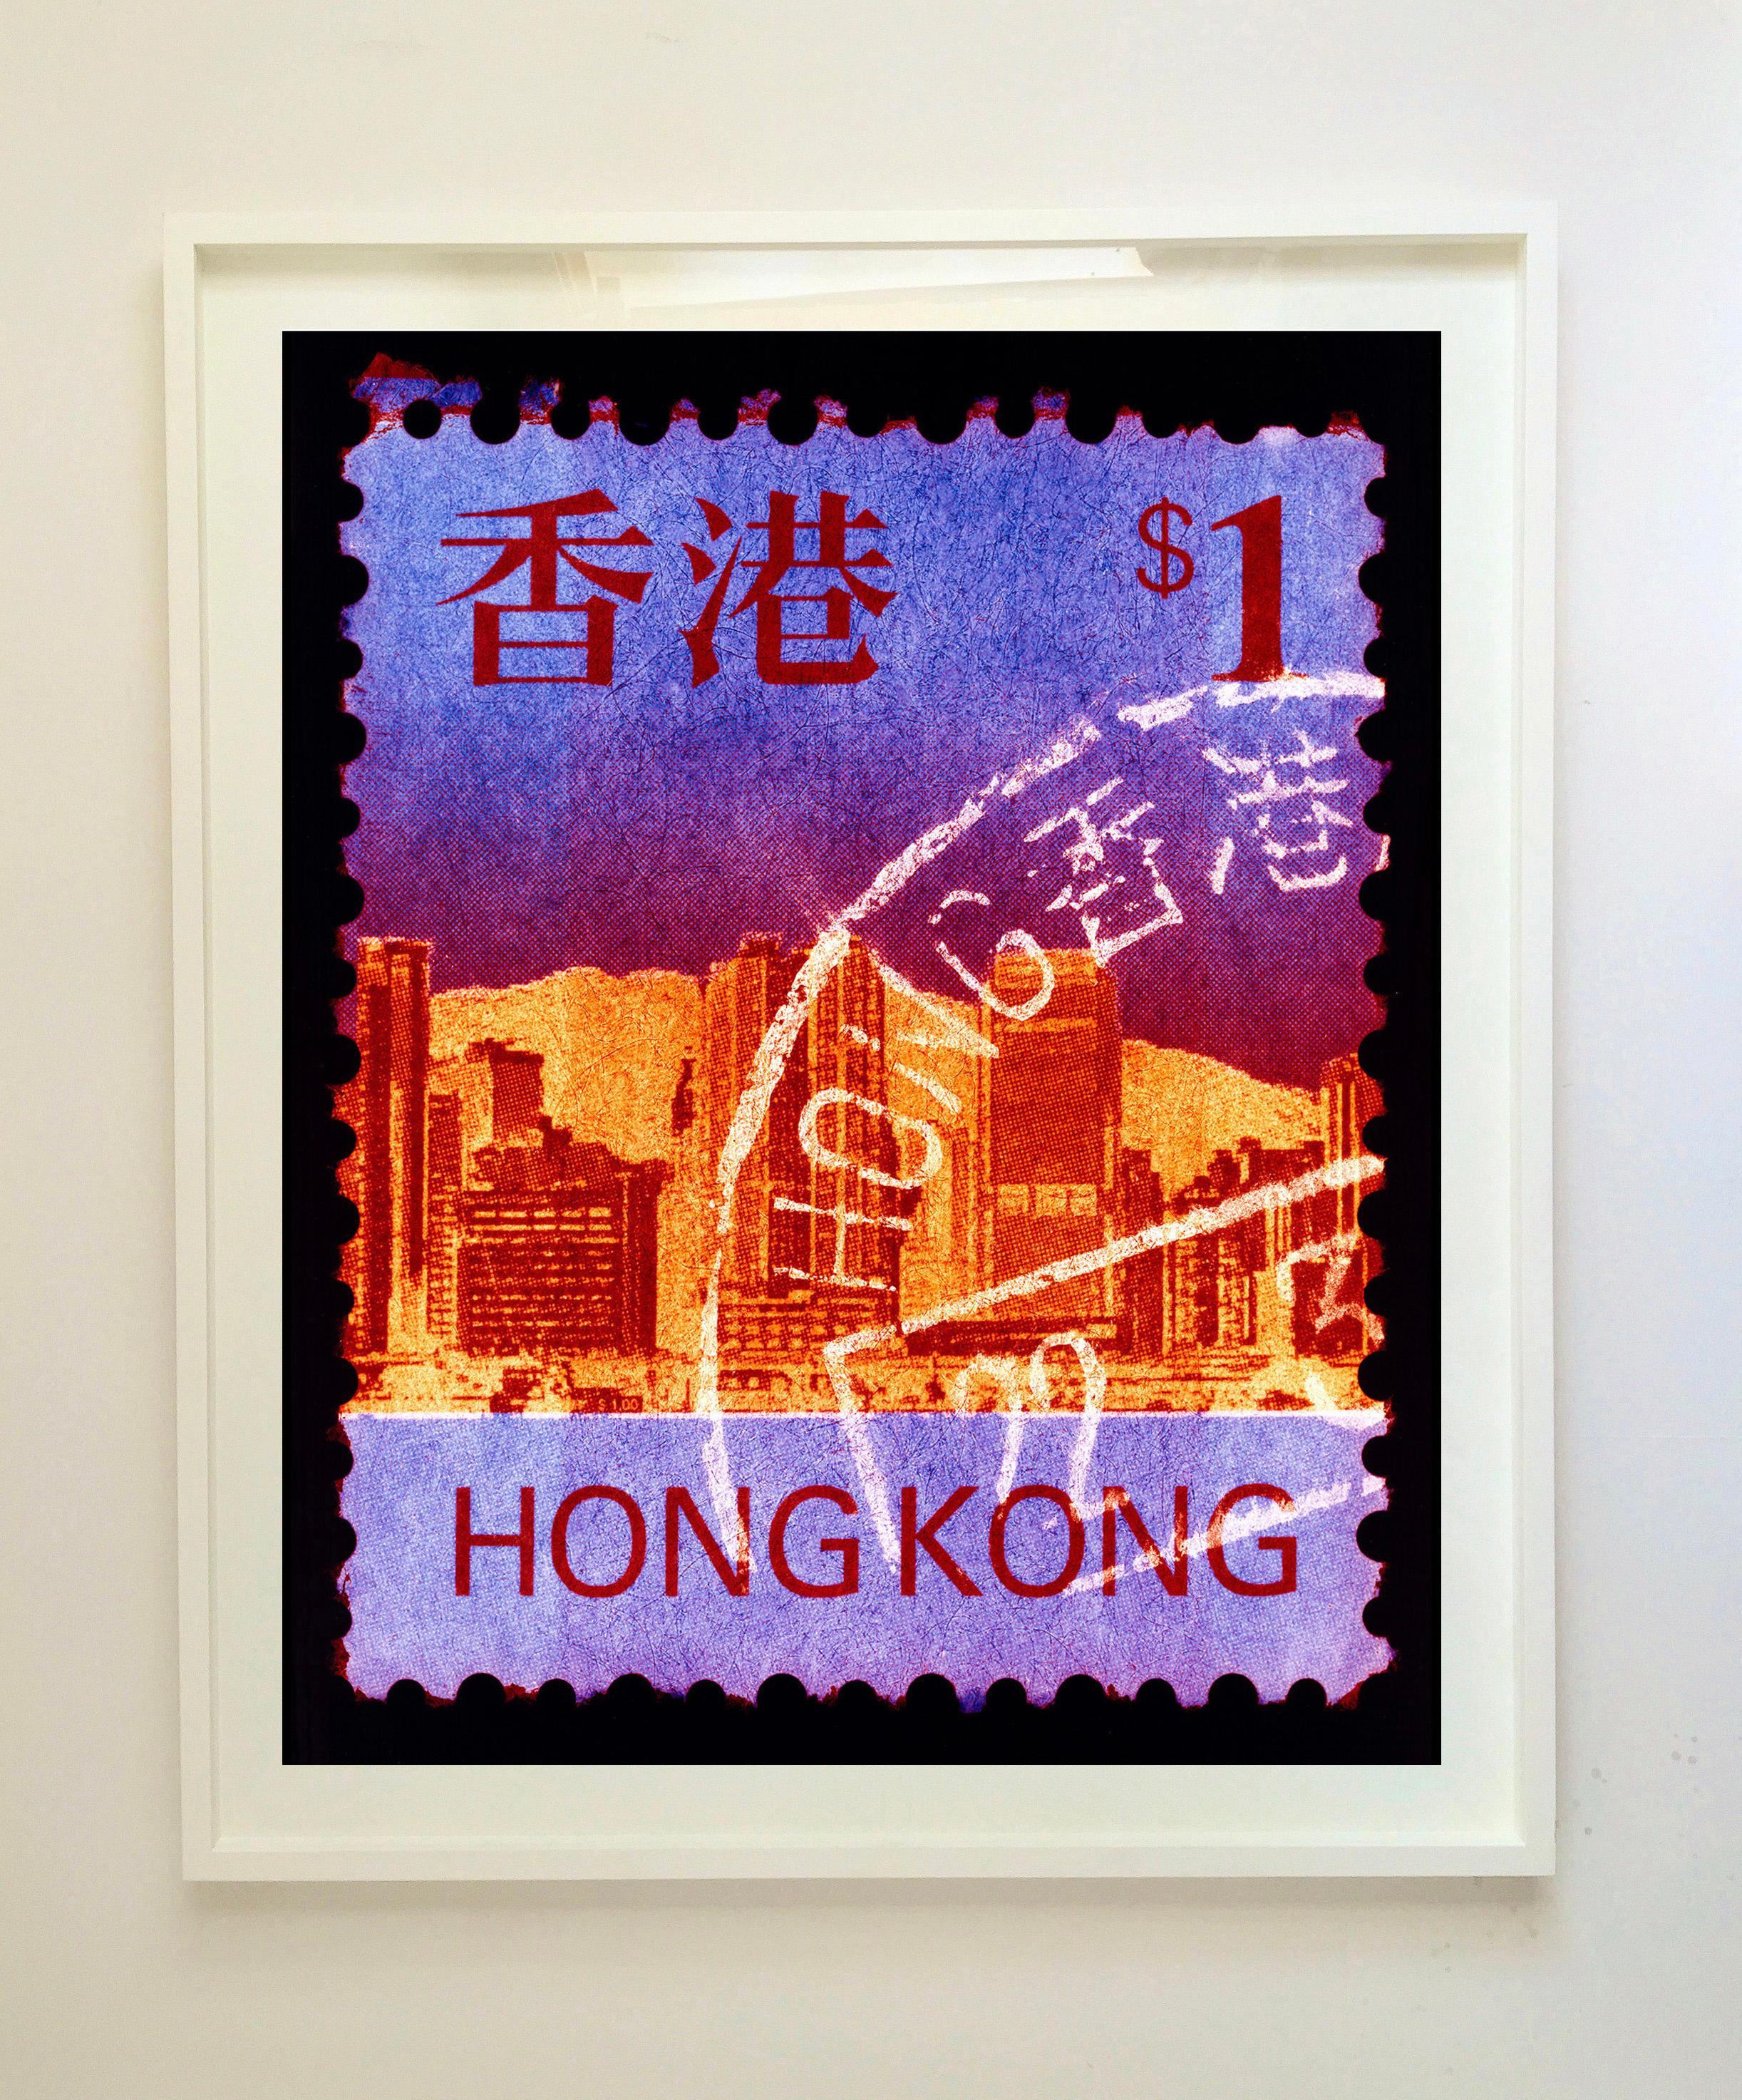 Briefmarkensammlung aus Hongkong, HK$1 – Pop-Art-Farbfotografie (Pink), Color Photograph, von Heidler & Heeps